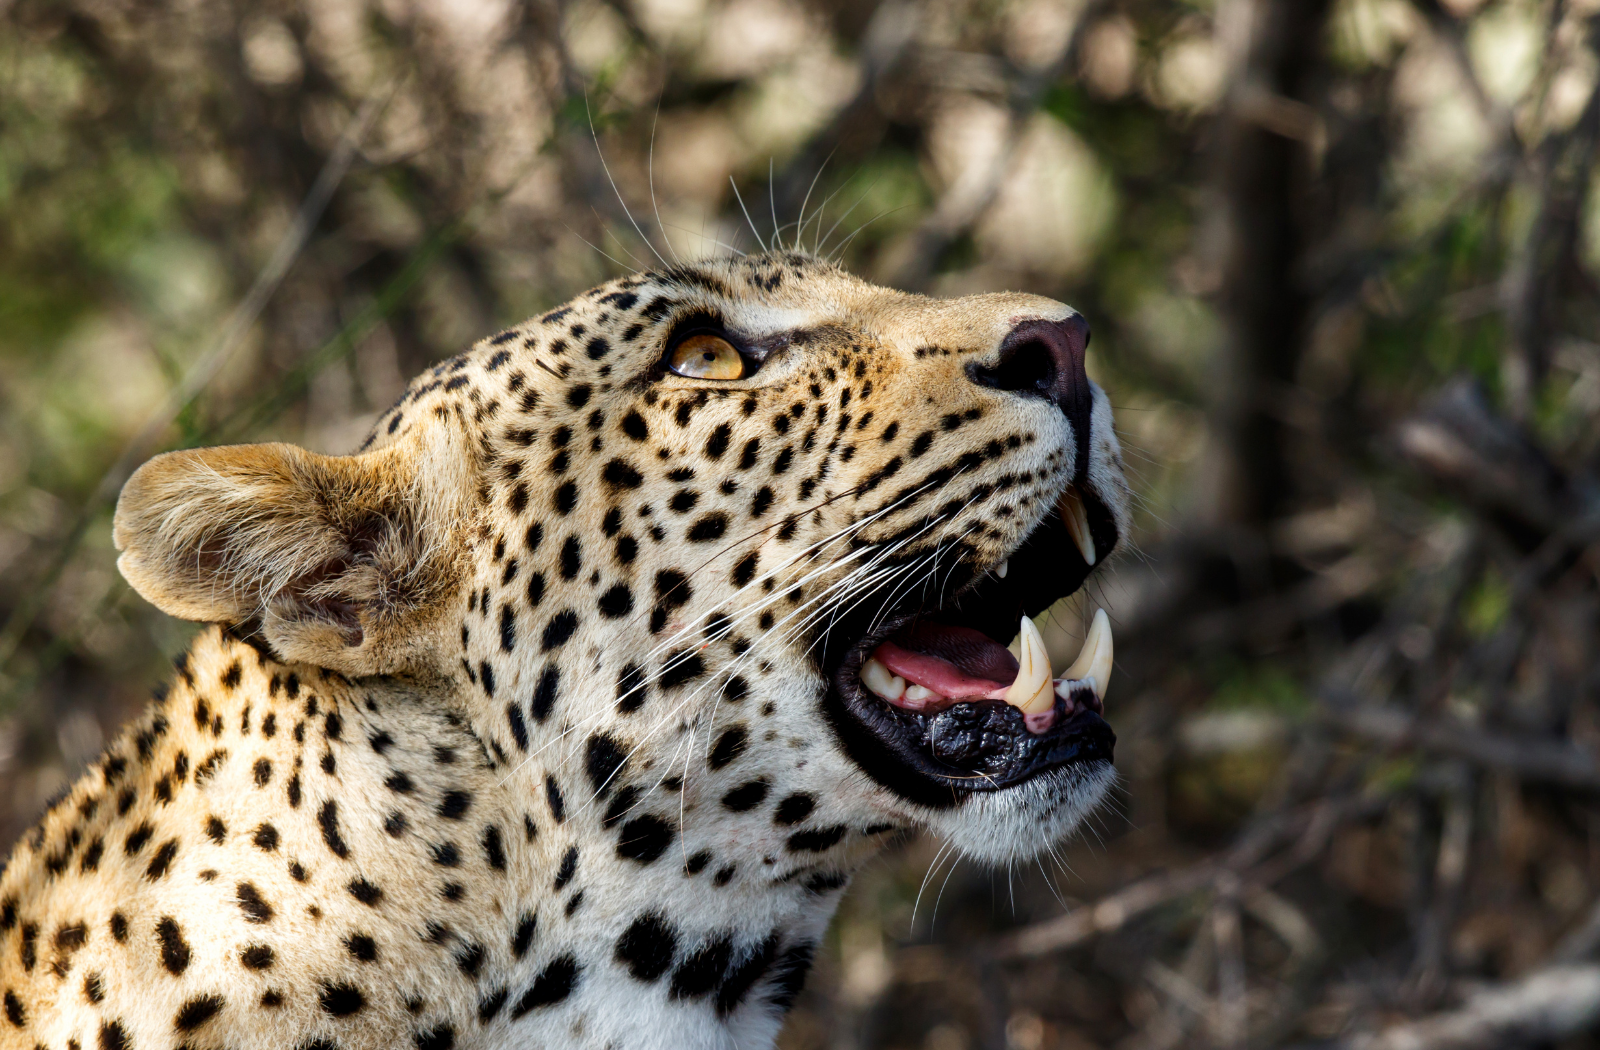 Male leopard in South Africa